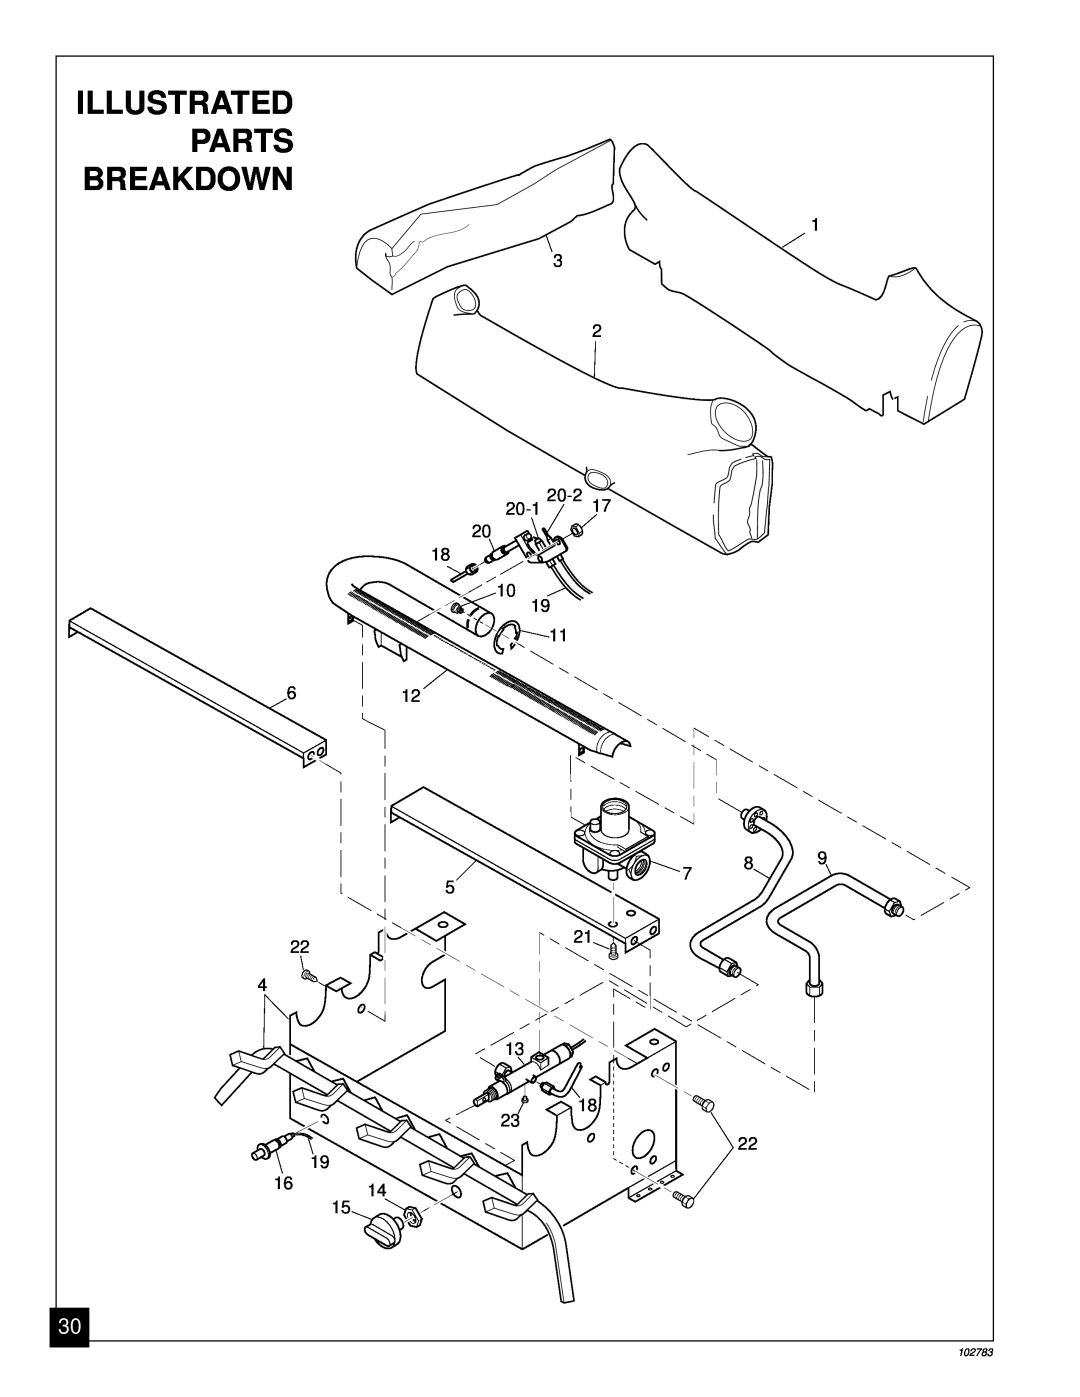 Desa 102783-01B installation manual Illustrated, Breakdown, Parts 